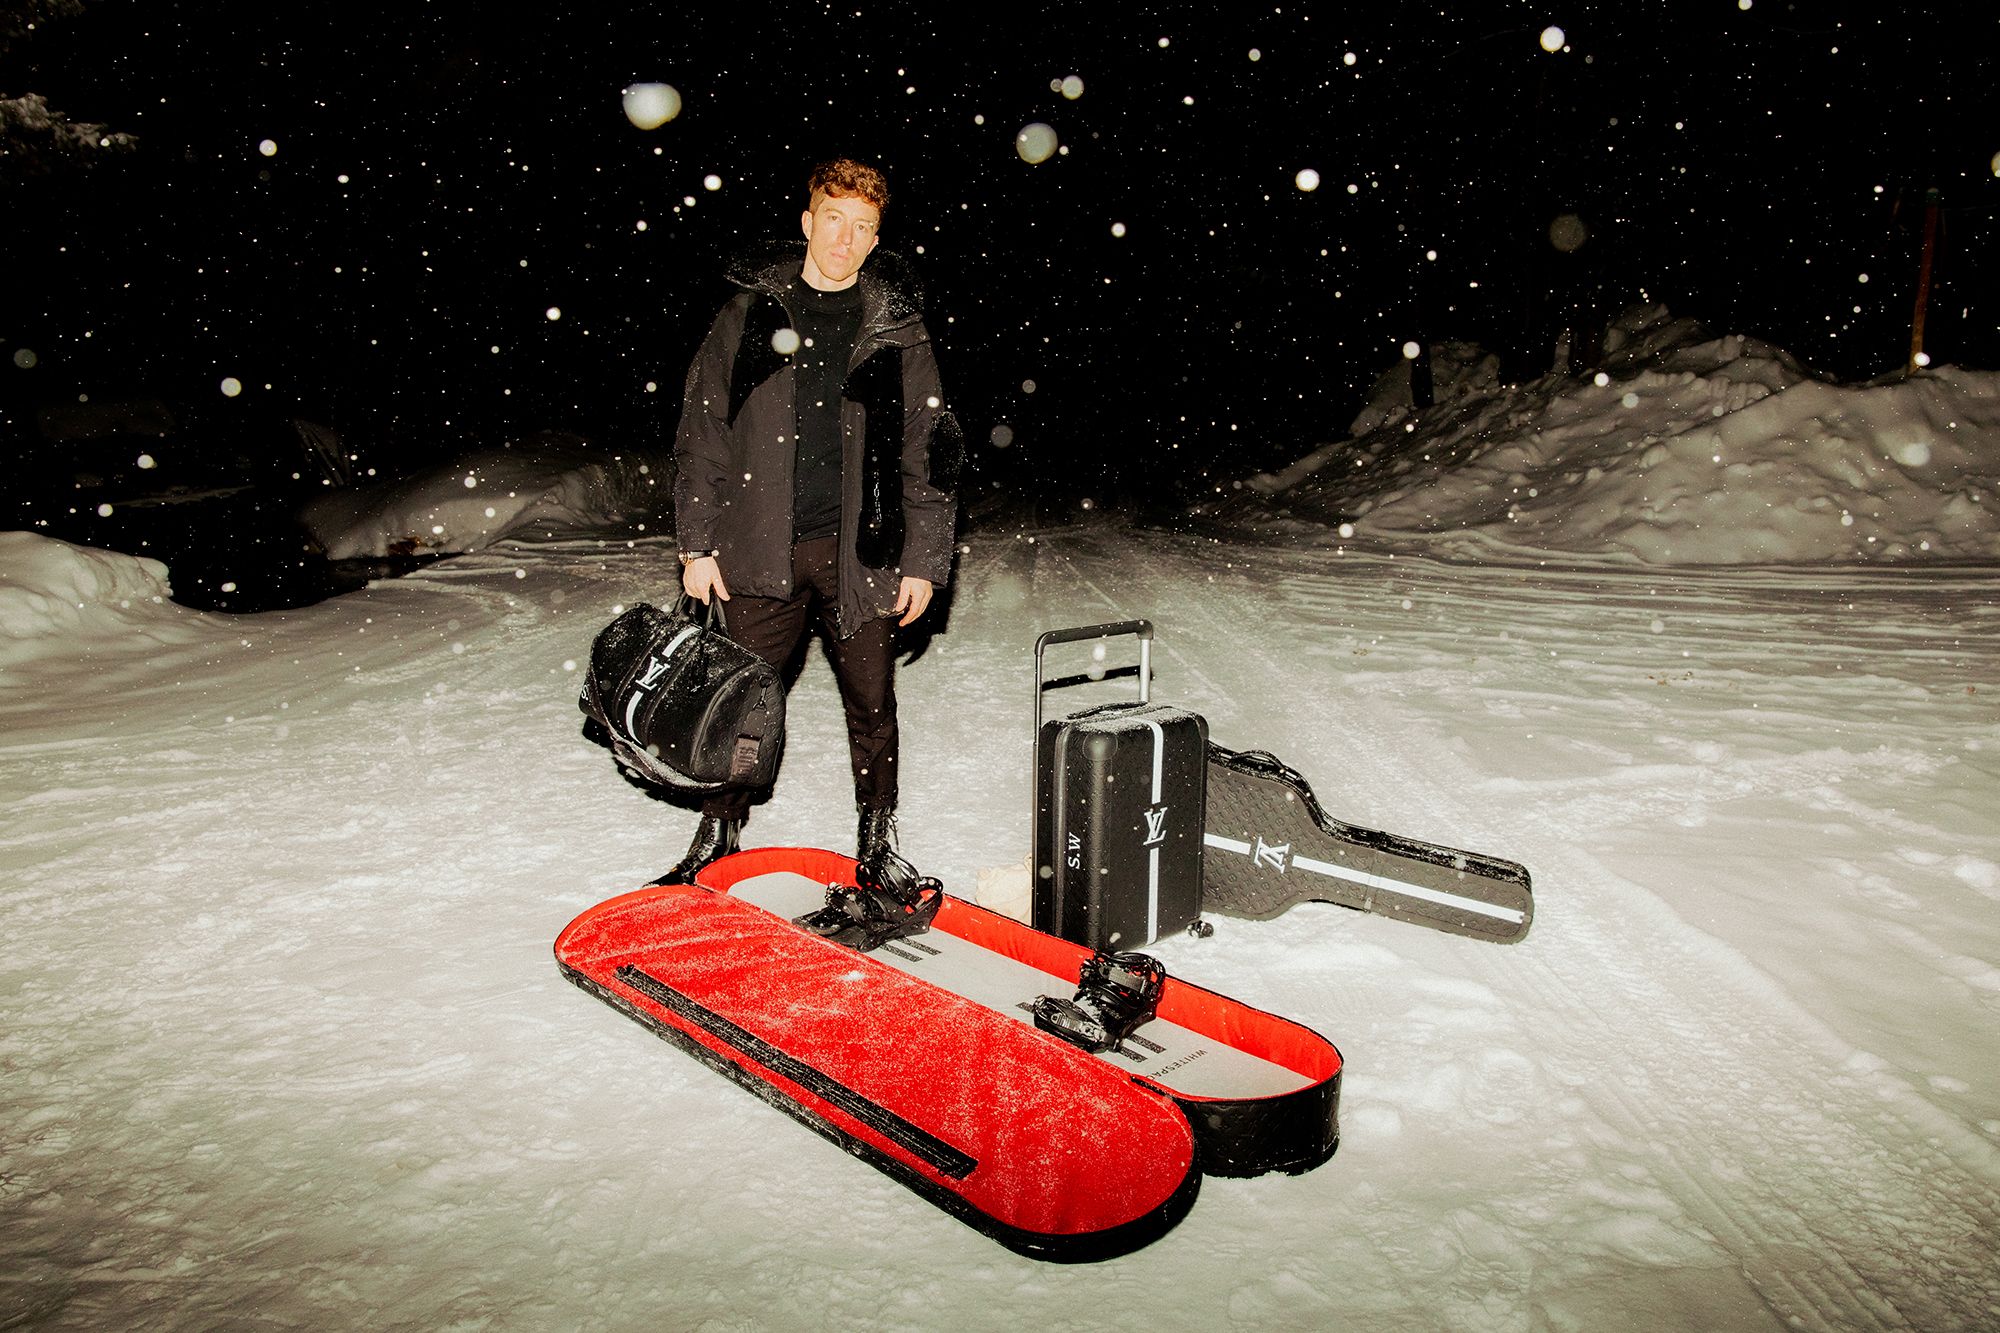 Shaun White's launches snowboard brand Whitespace